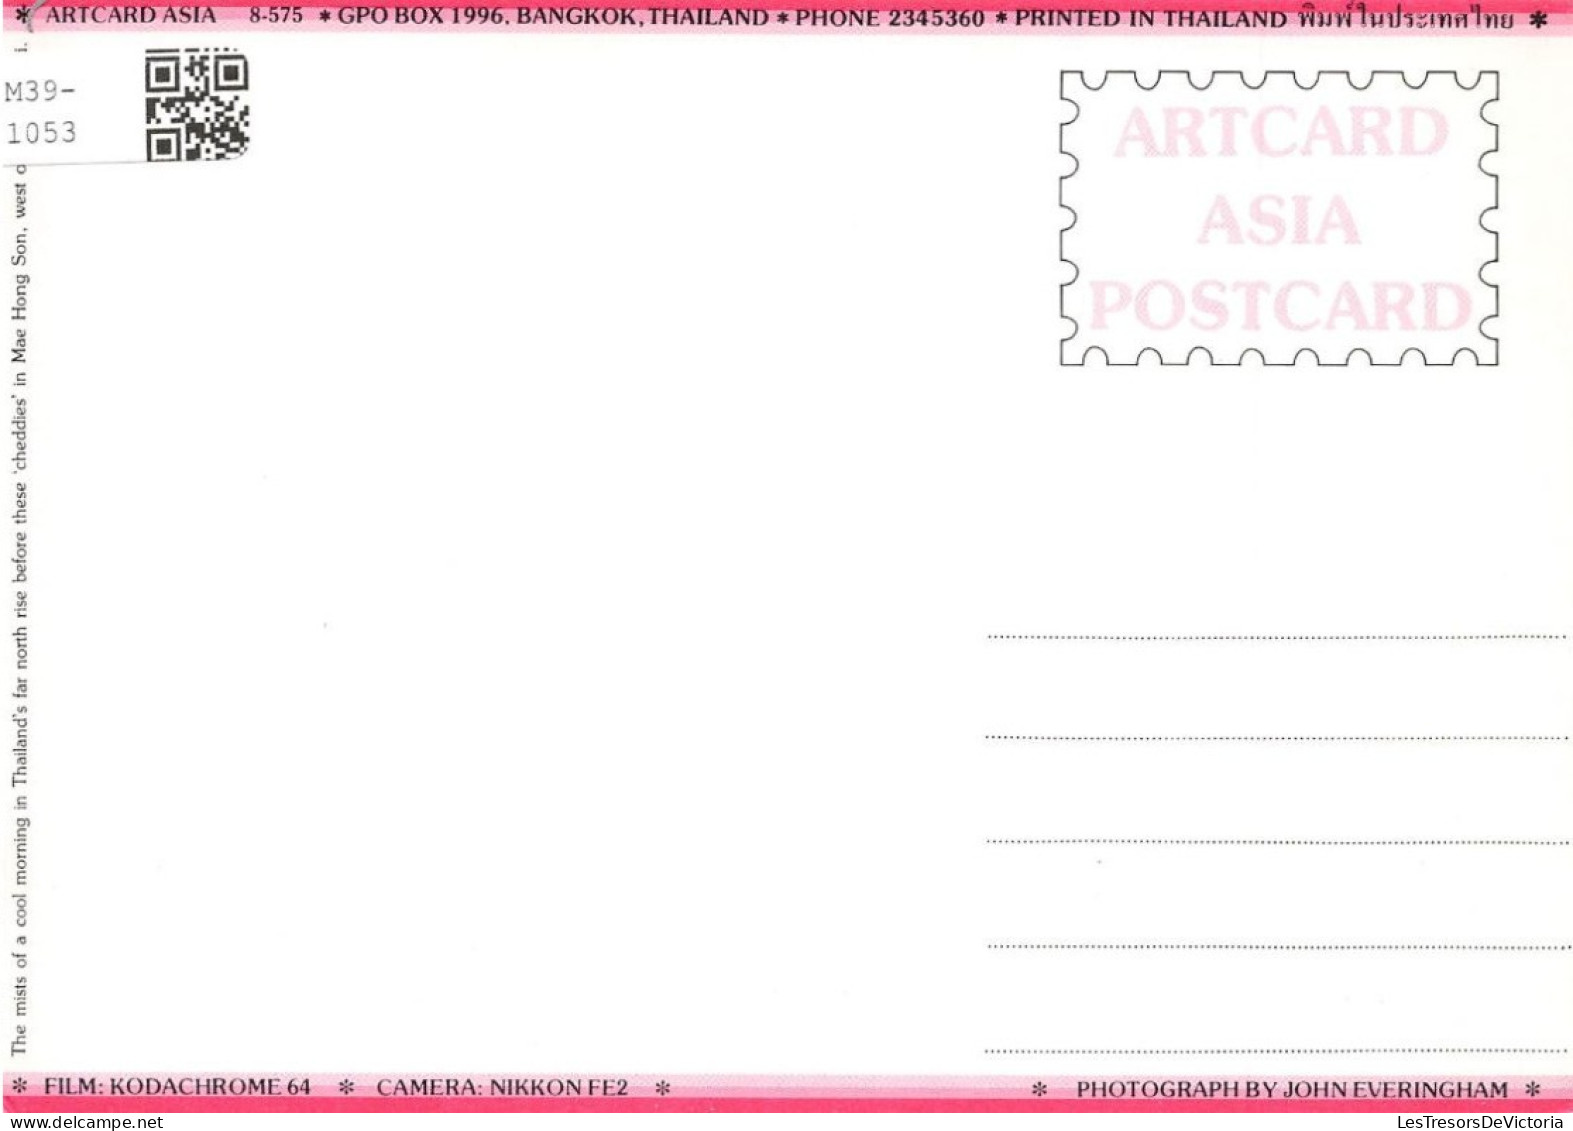 THAÏLANDE - Art Card Asia PostCard - Bangkok - Thailand - Carte Postale - Tailandia